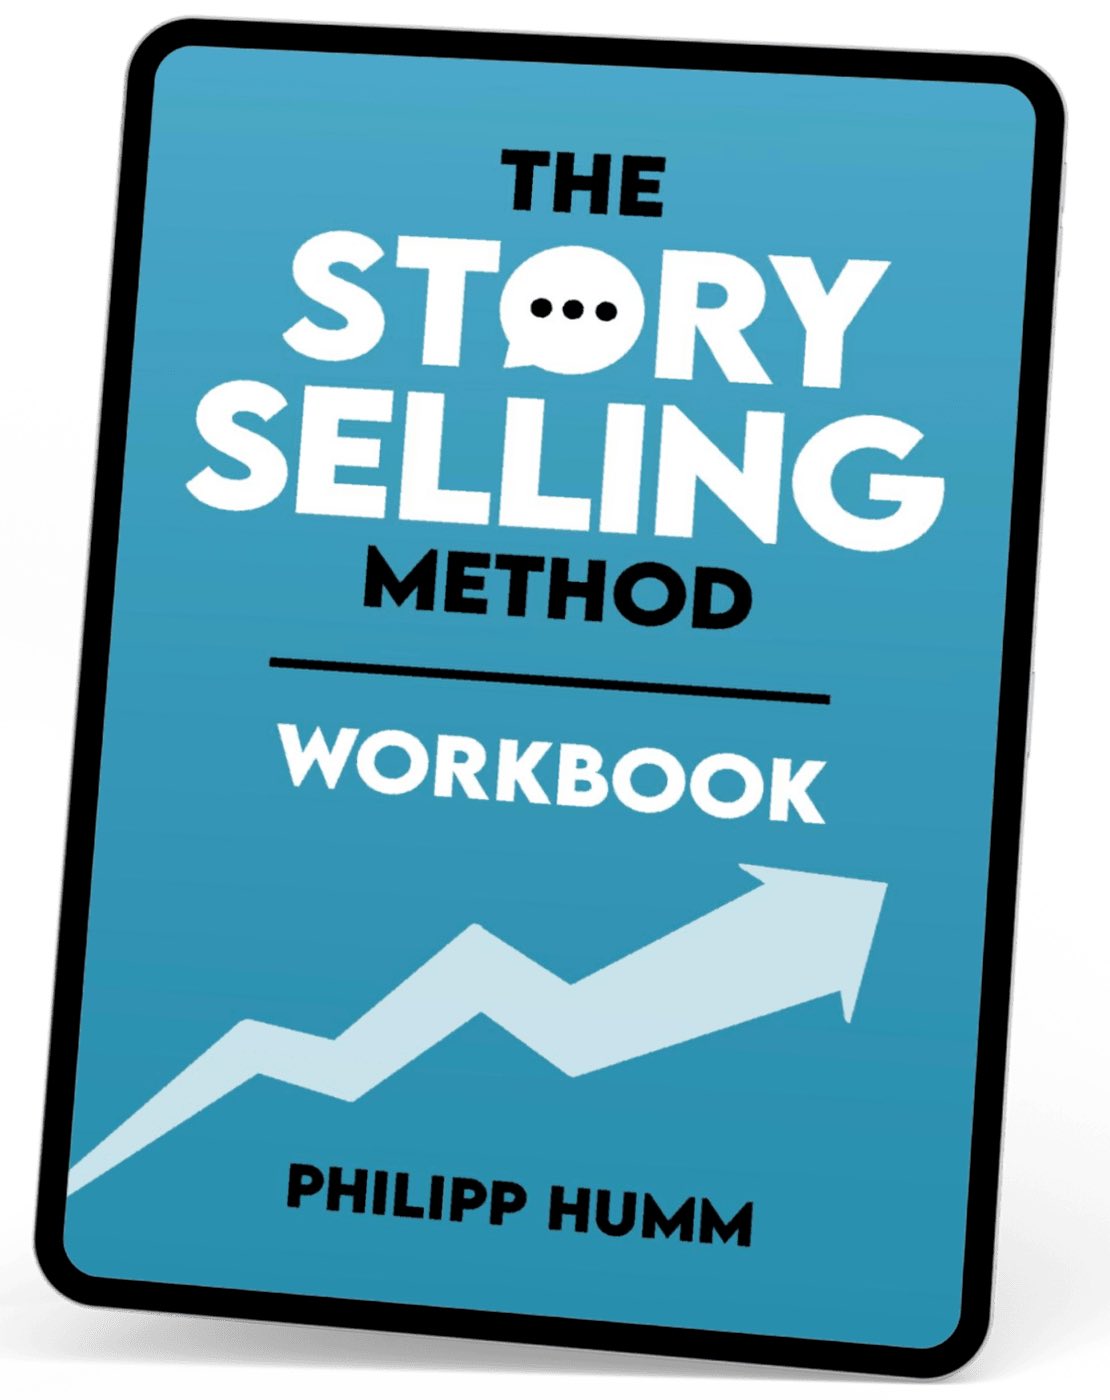 StorySelling Method Workbook